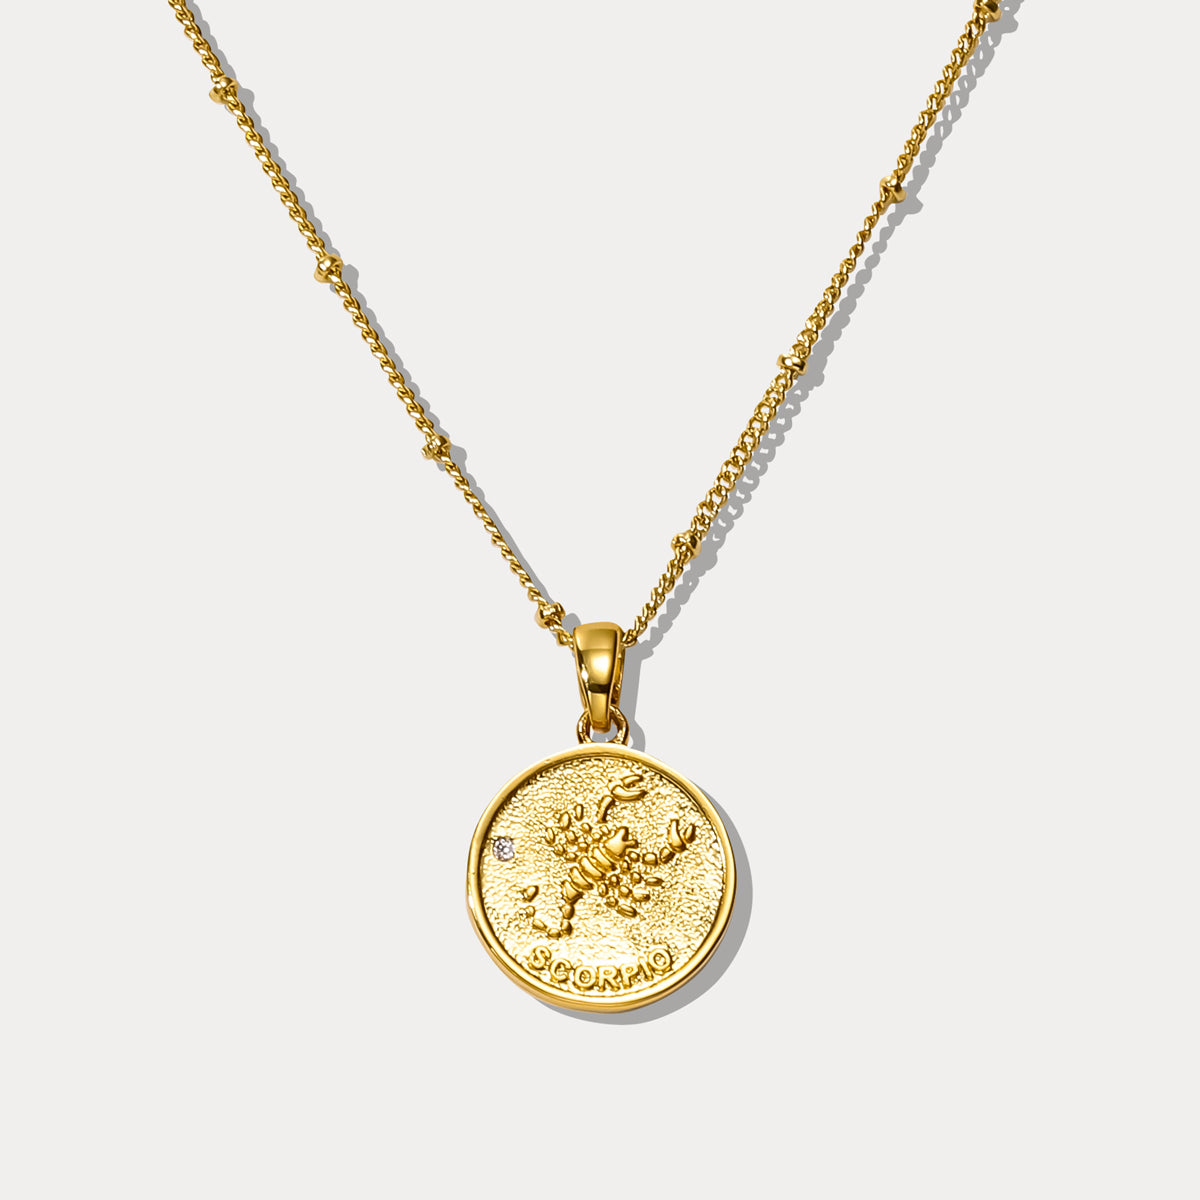 Selenichast Scorpio Constellation Coin Pendant Necklace